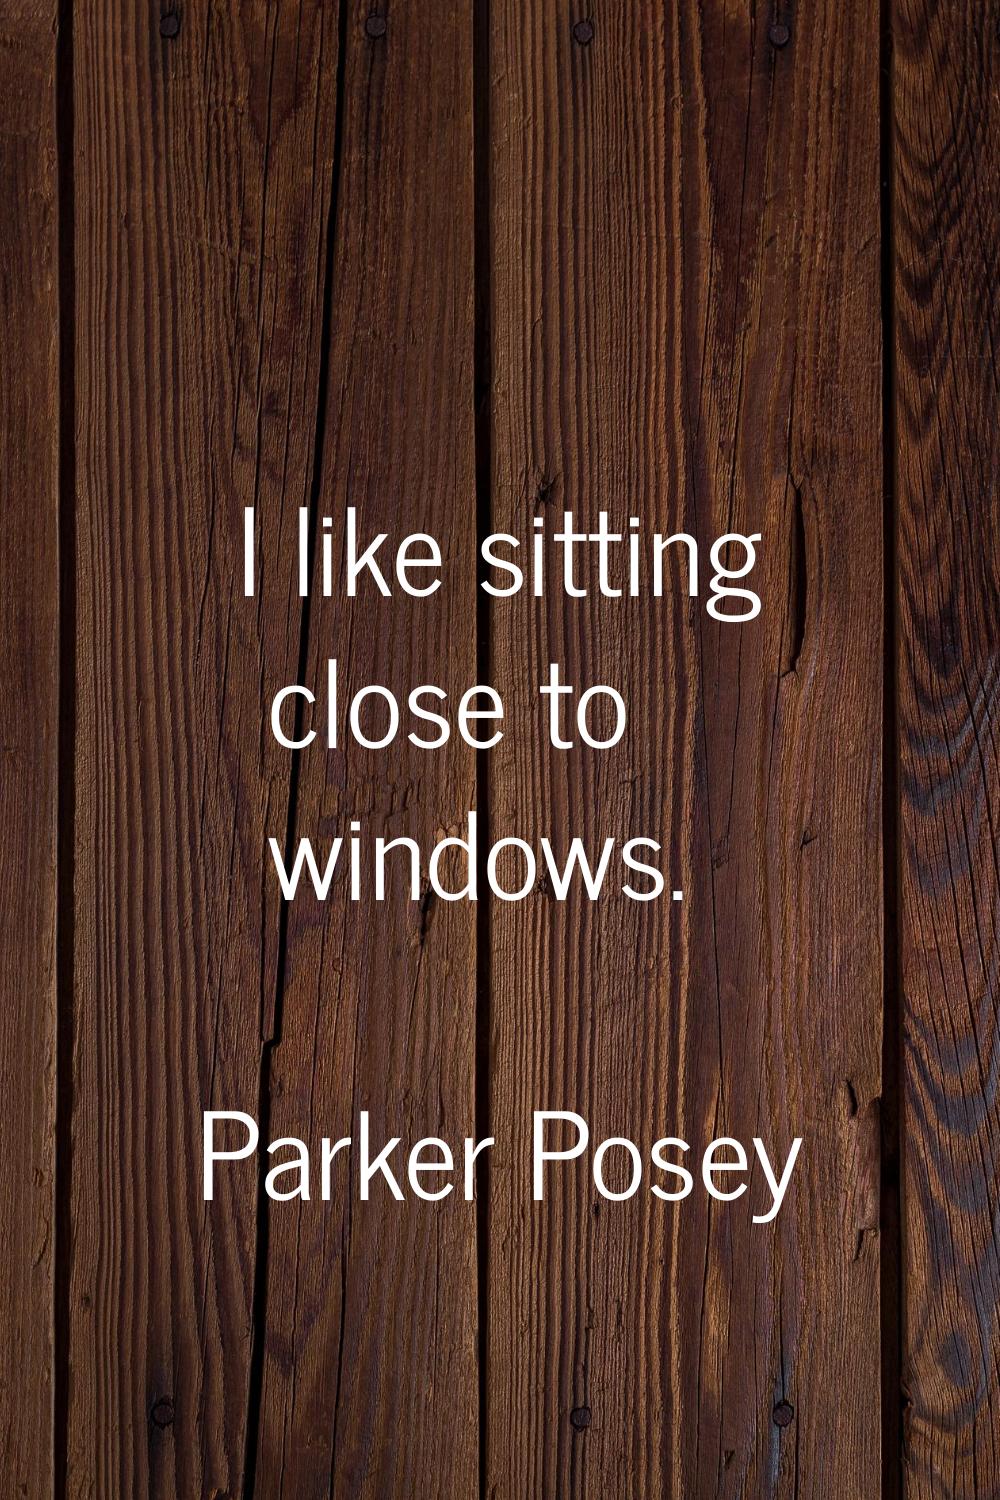 I like sitting close to windows.